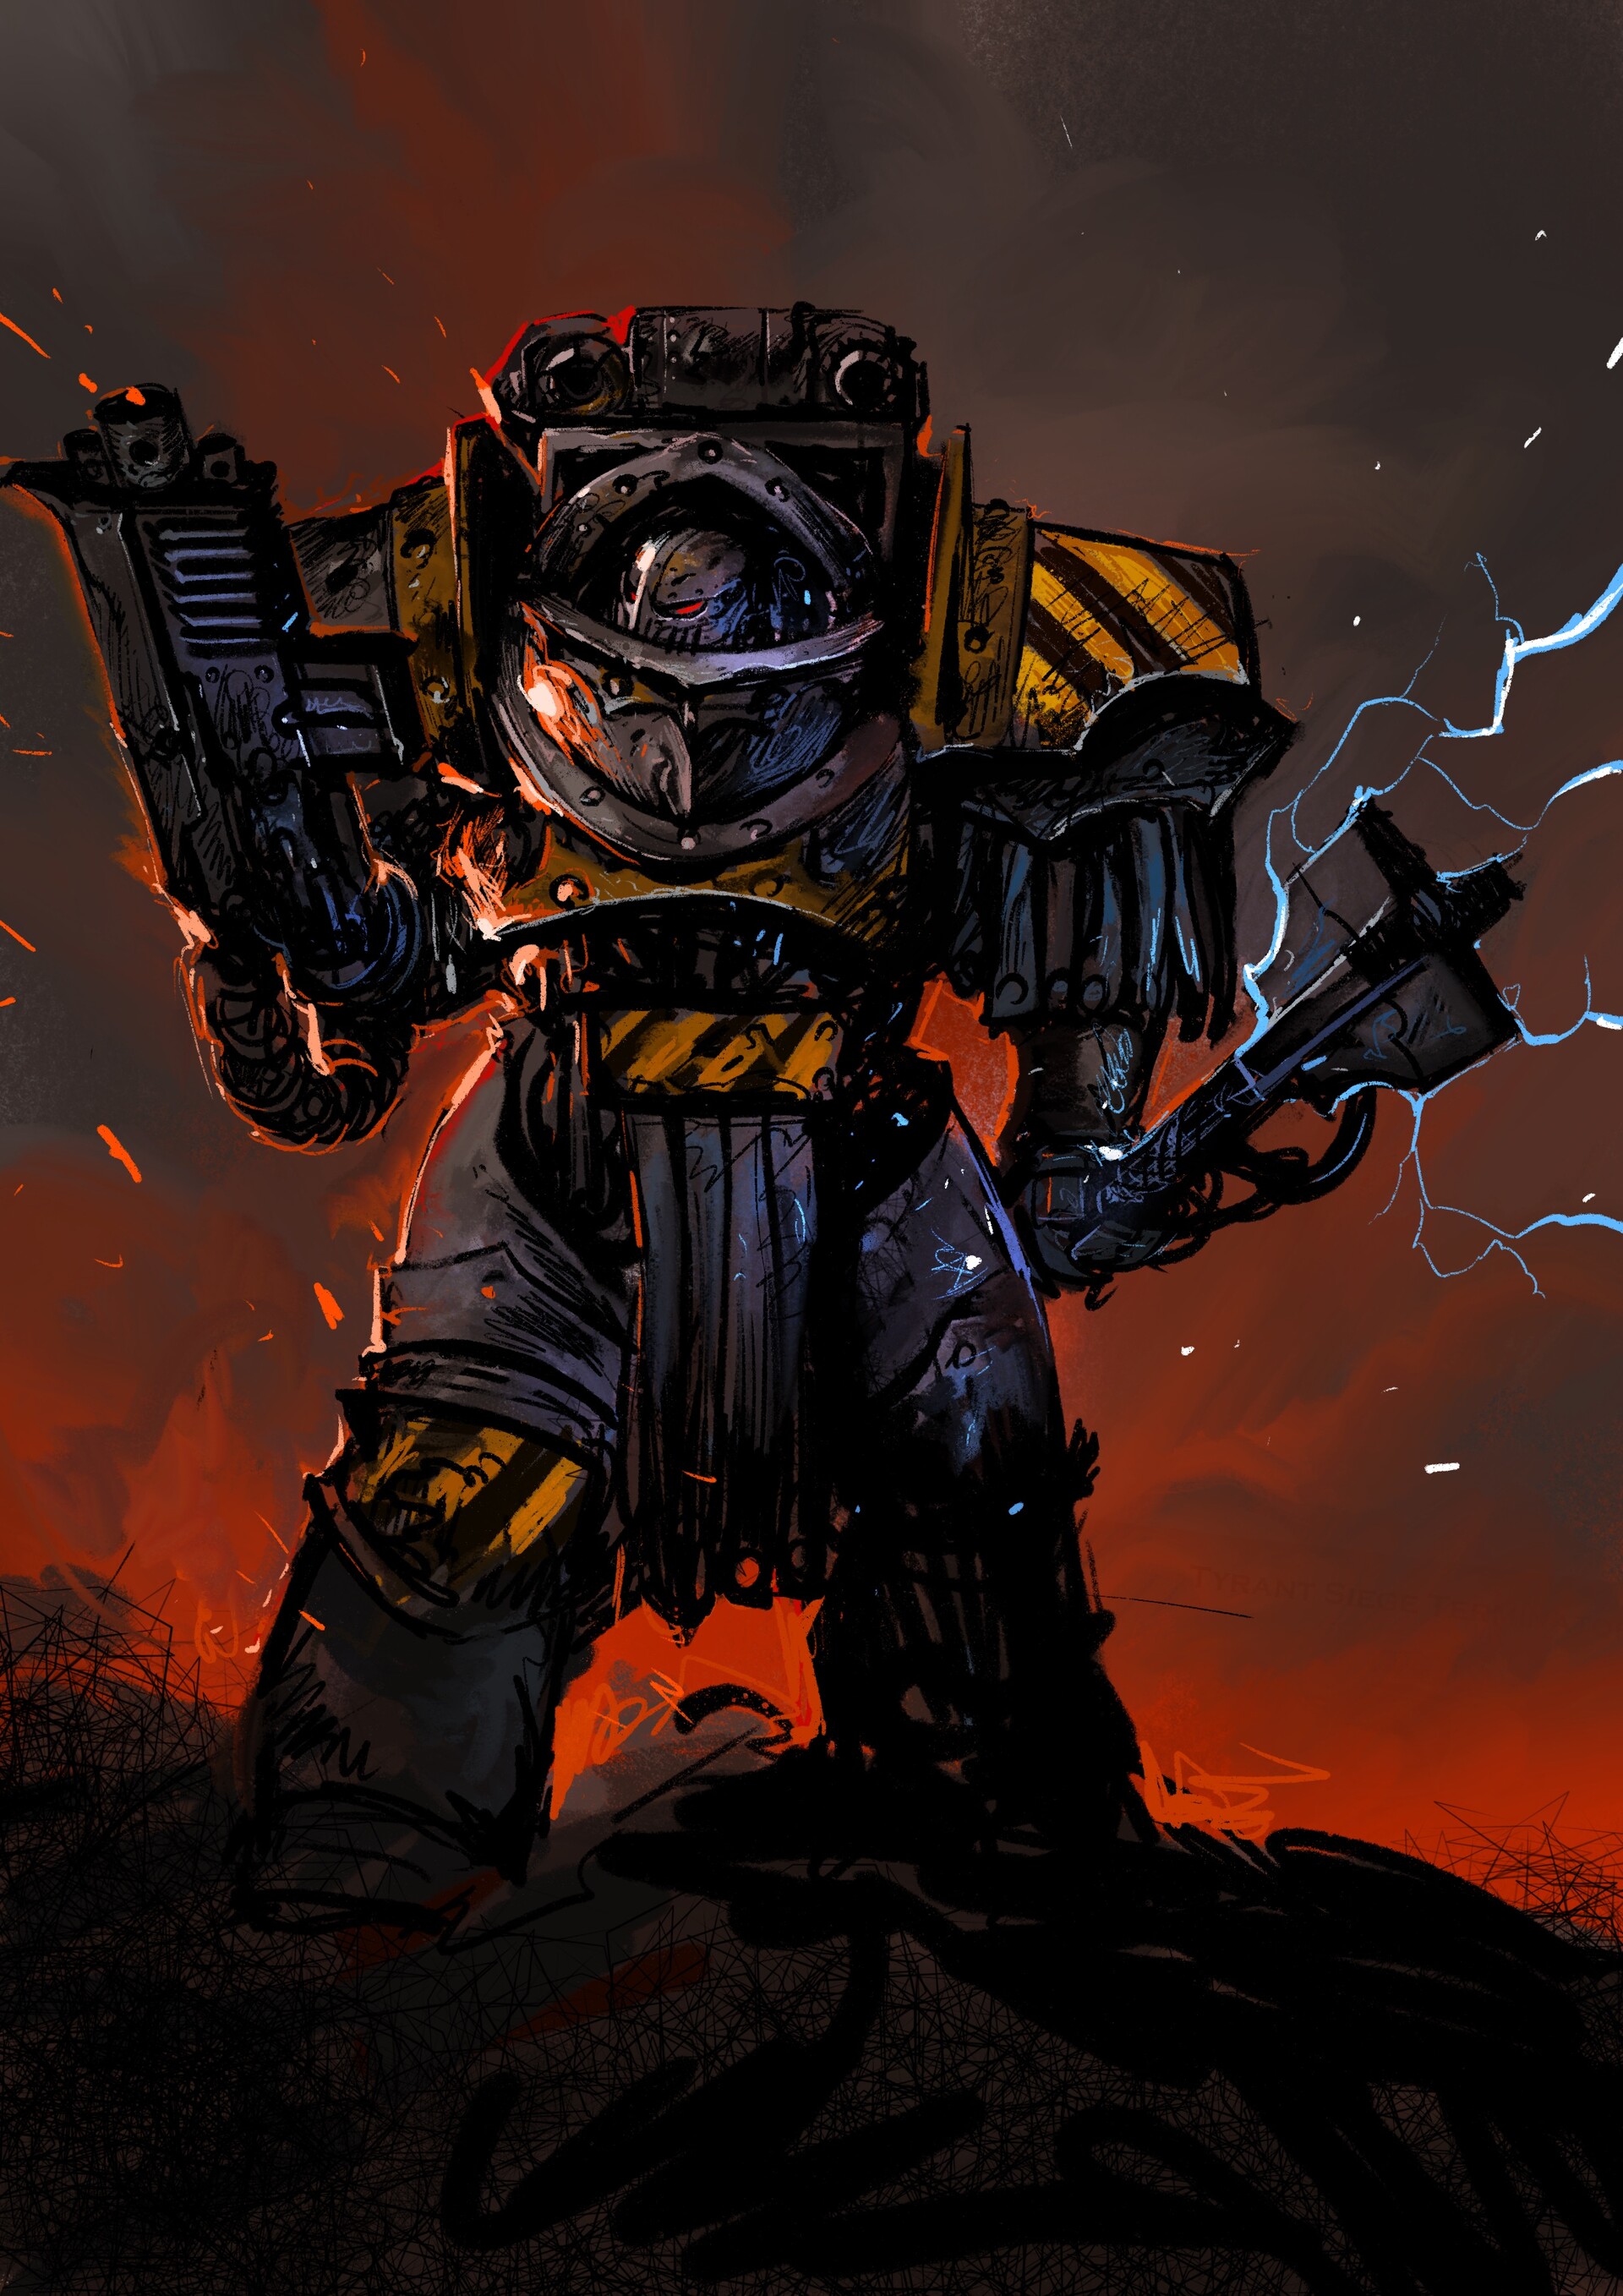 Ironwarrior. Warhammer 40k fan art by Ronan Toulhoat : r/ImaginaryWarhammer